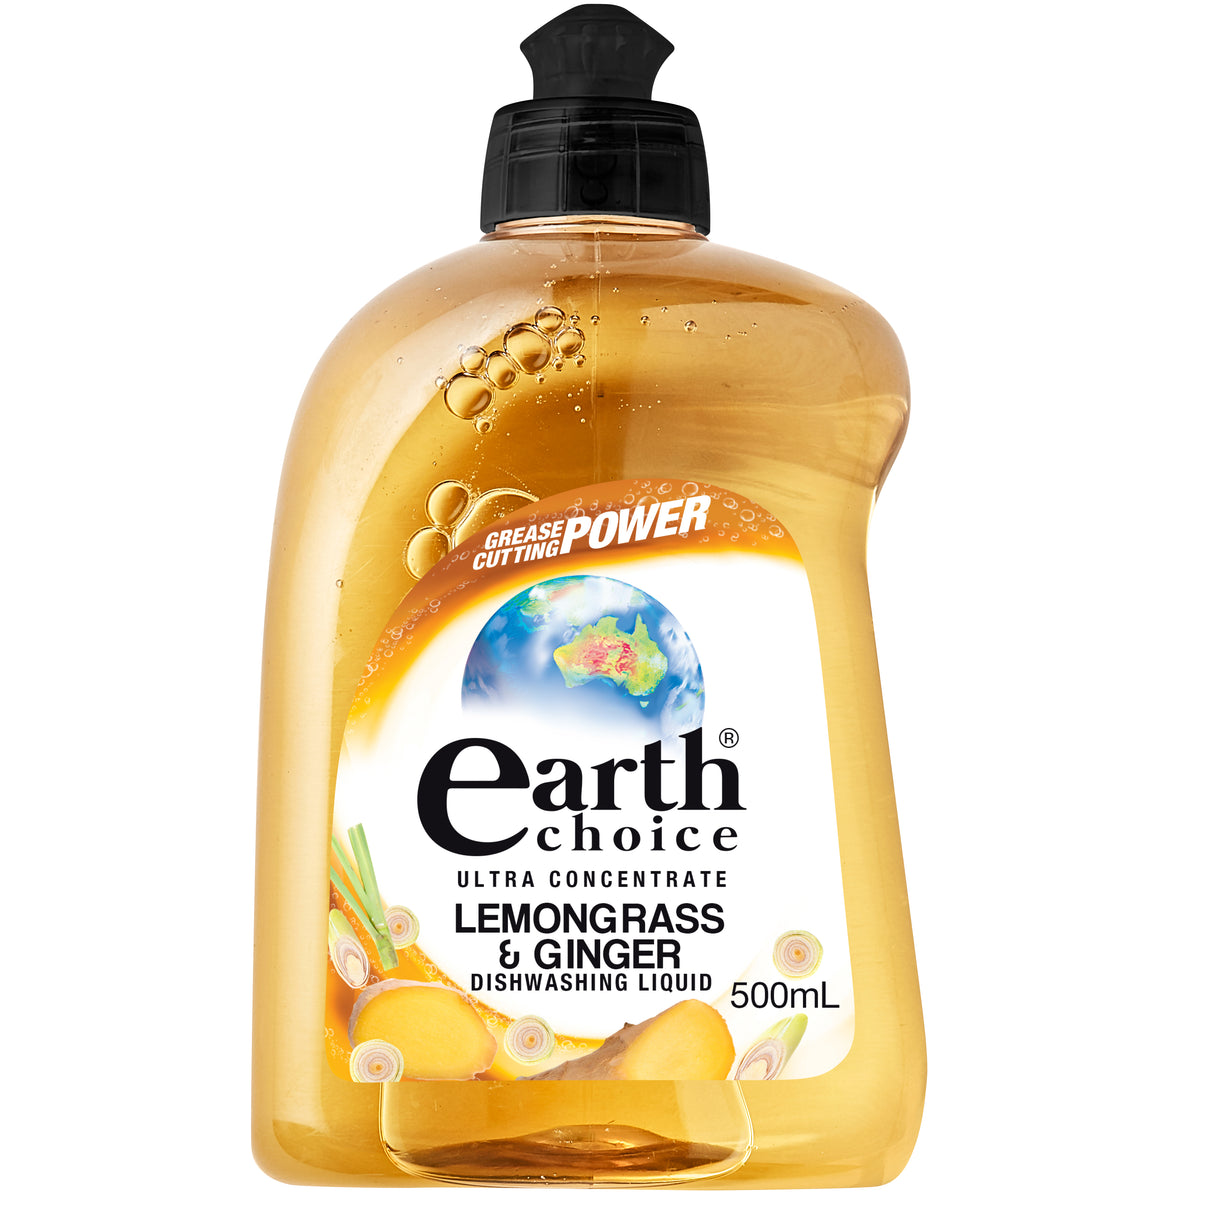 Earth Choice Lemongrass & Ginger Concentrate Dishwashing Liquid 500ml